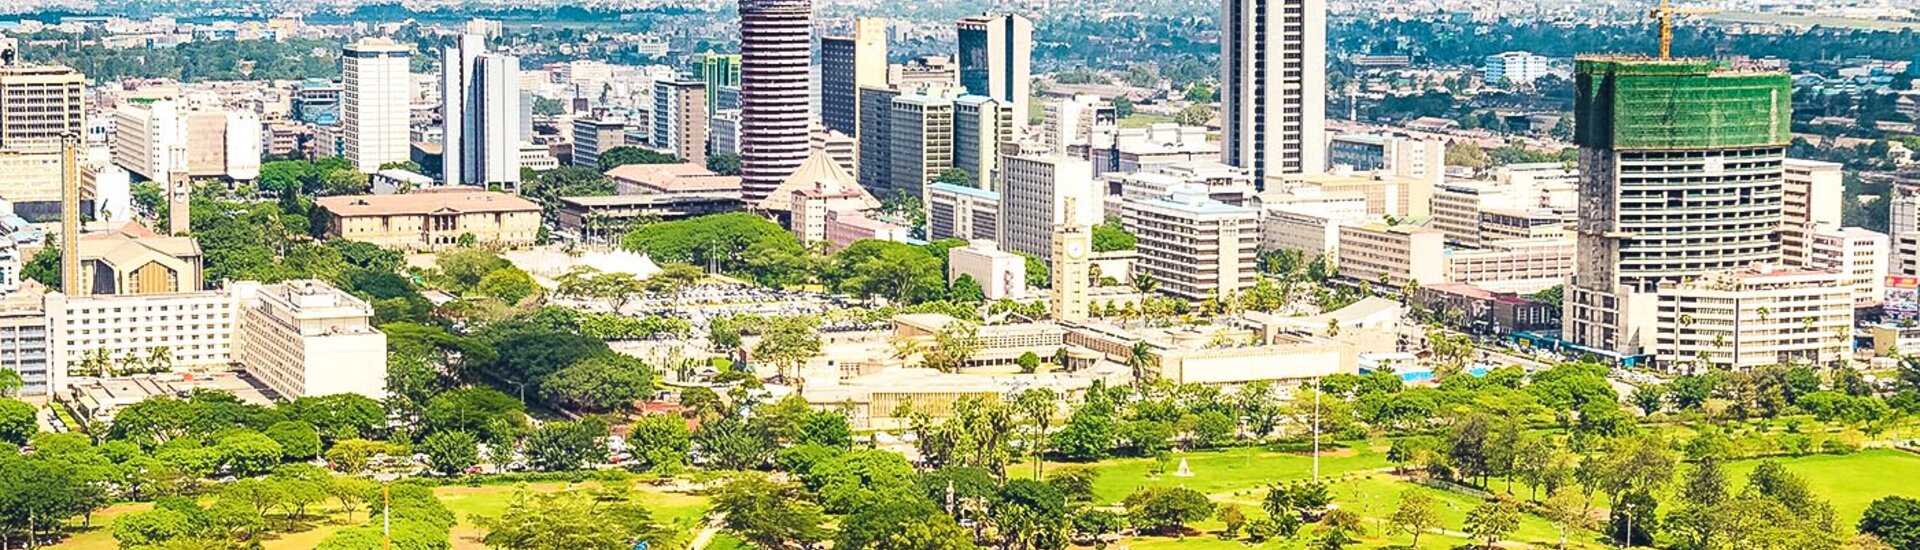 Stadtbild von Nairobi, Kenia